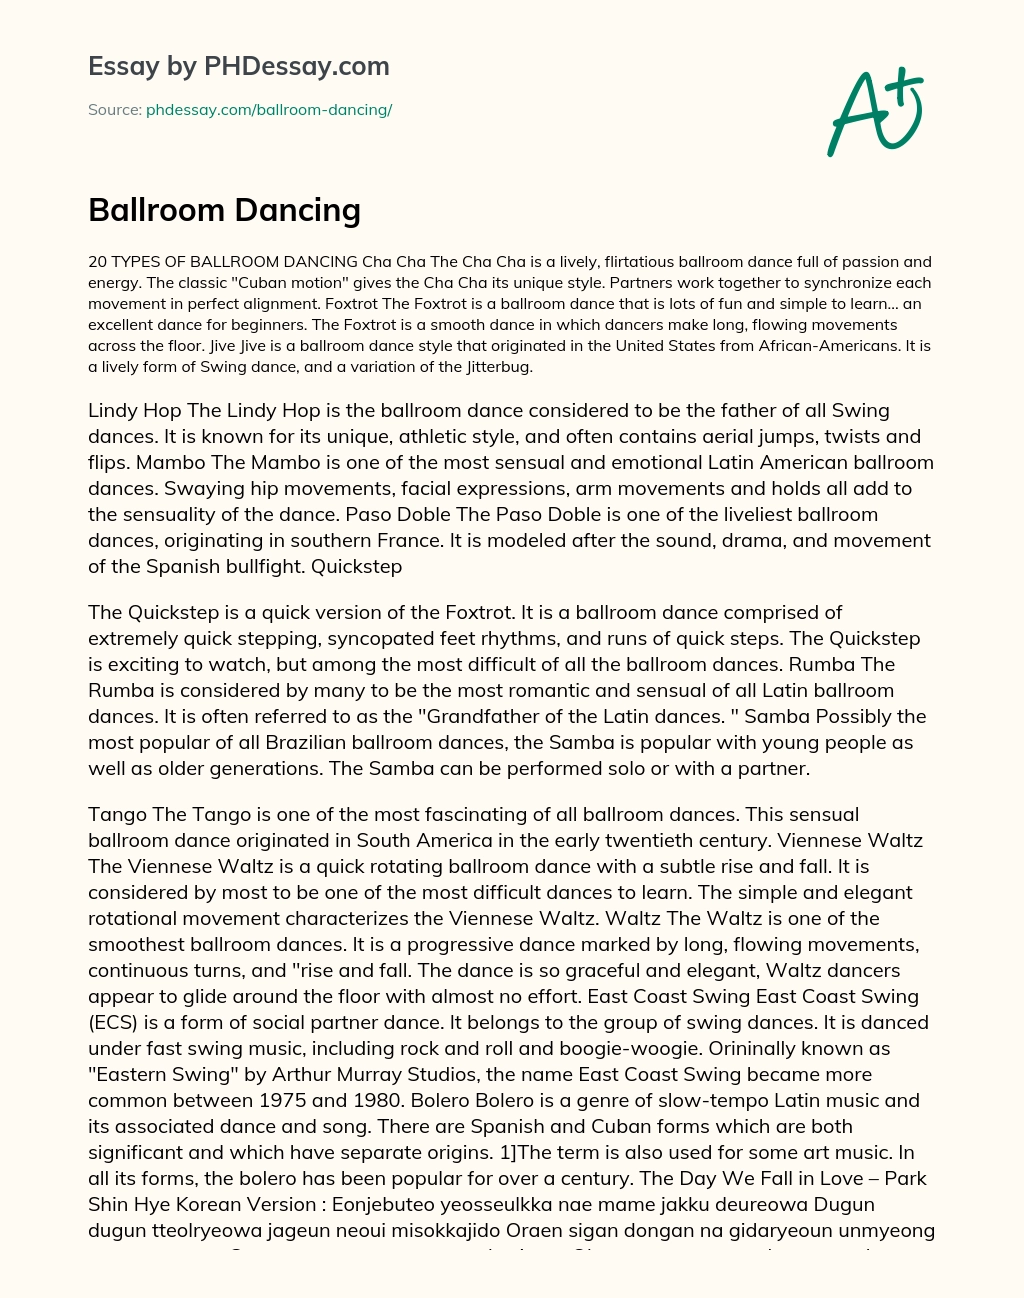 Types of Ballroom Dancing essay